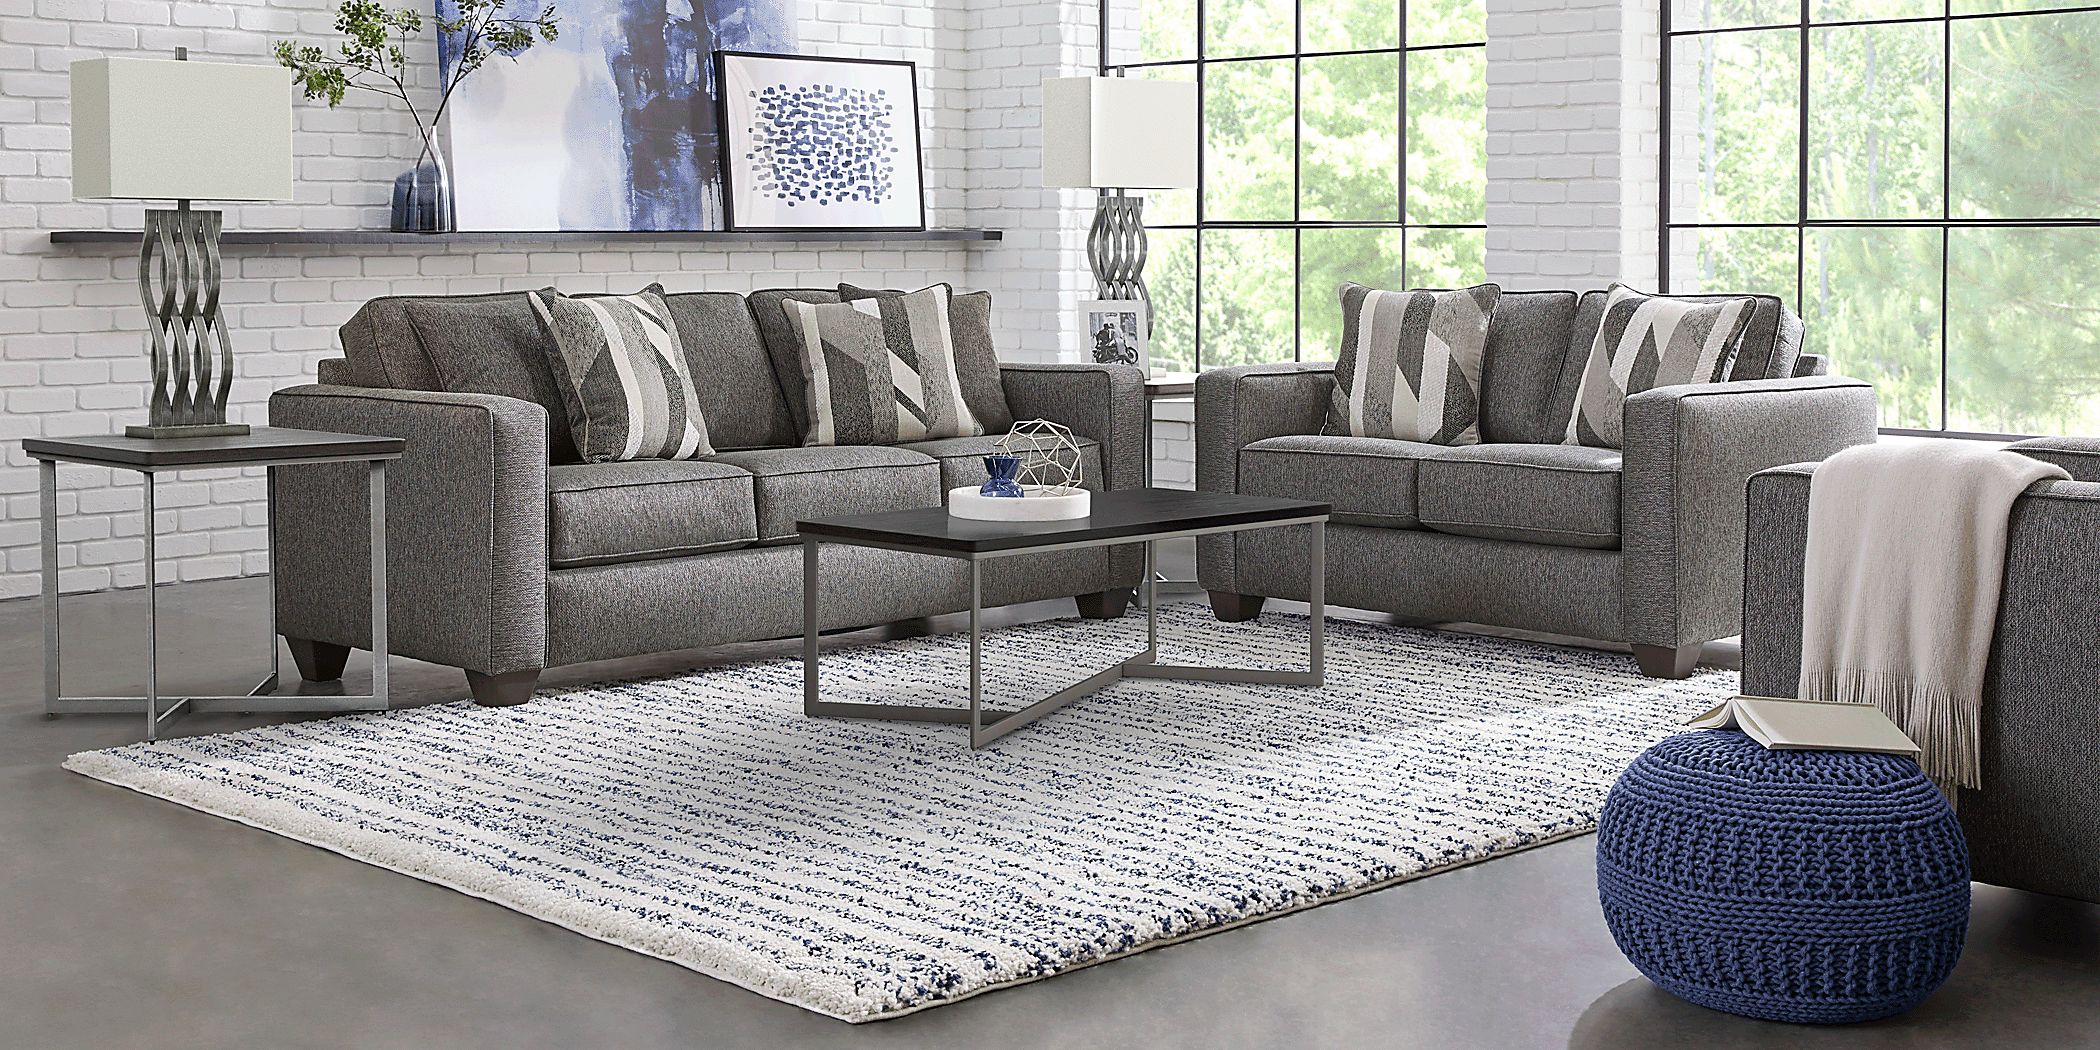 Ridgewater Graphite 7 Pc Living Room with Sleeper Sofa